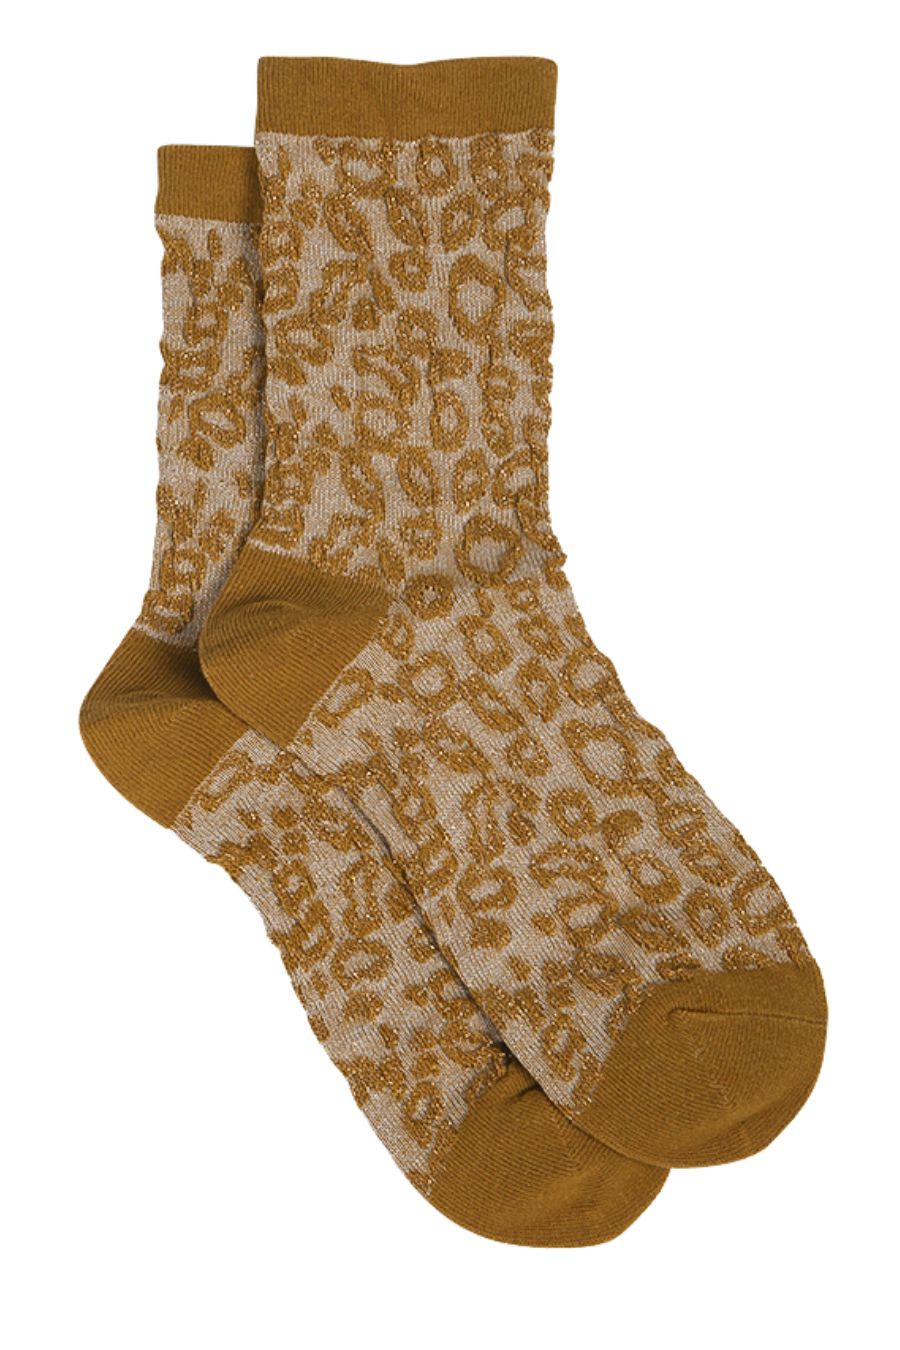 Womens Glitter Socks Leopard Print Silver Sparkly Ankle Socks Mustard